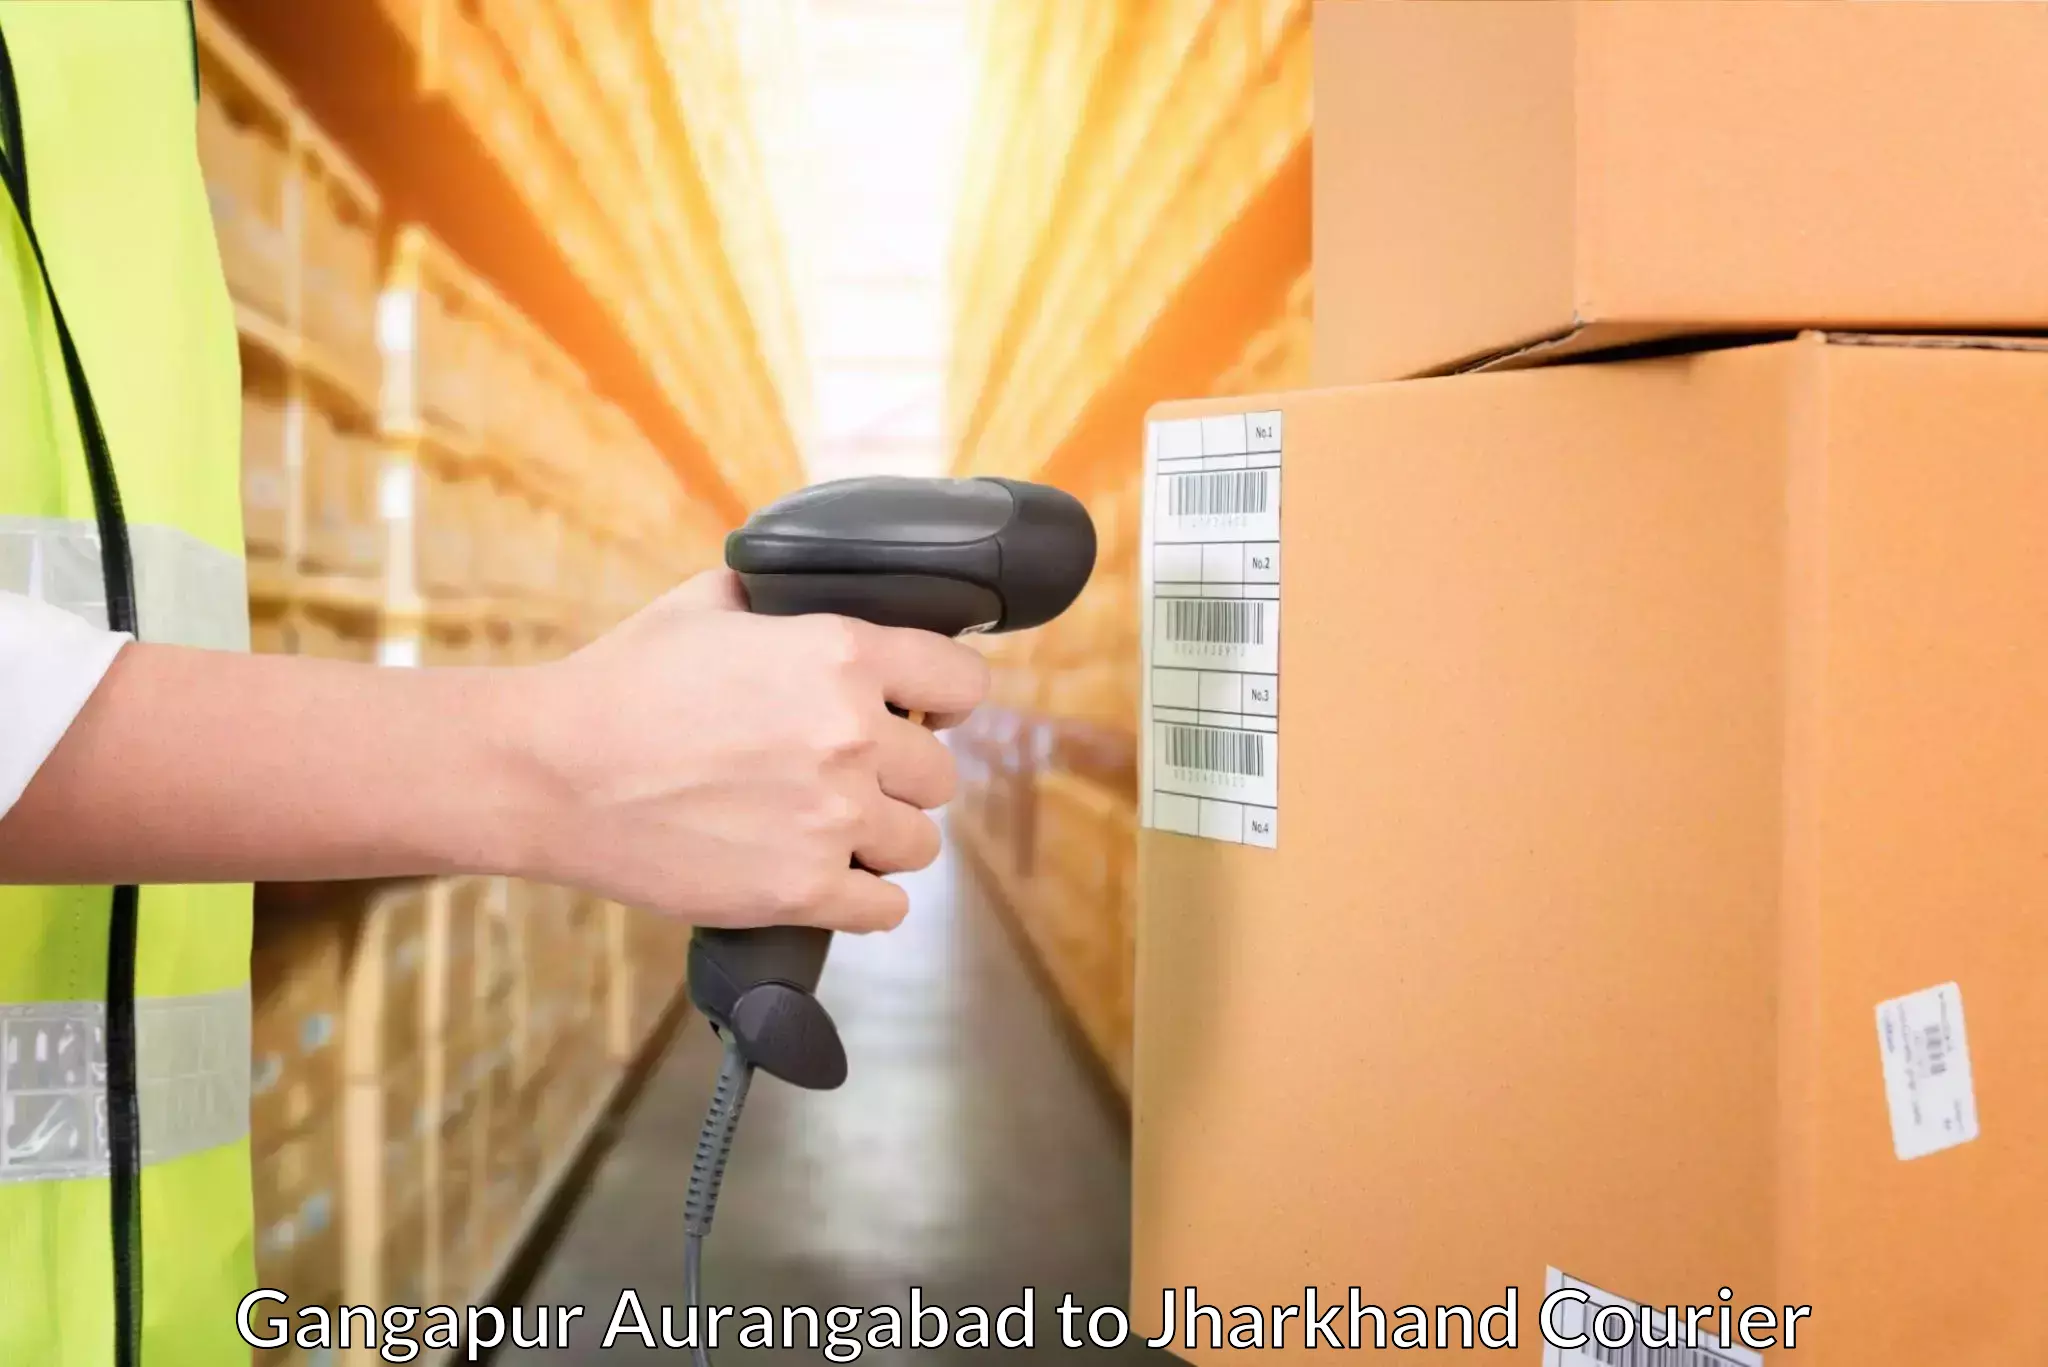 International parcel service Gangapur Aurangabad to Jharkhand